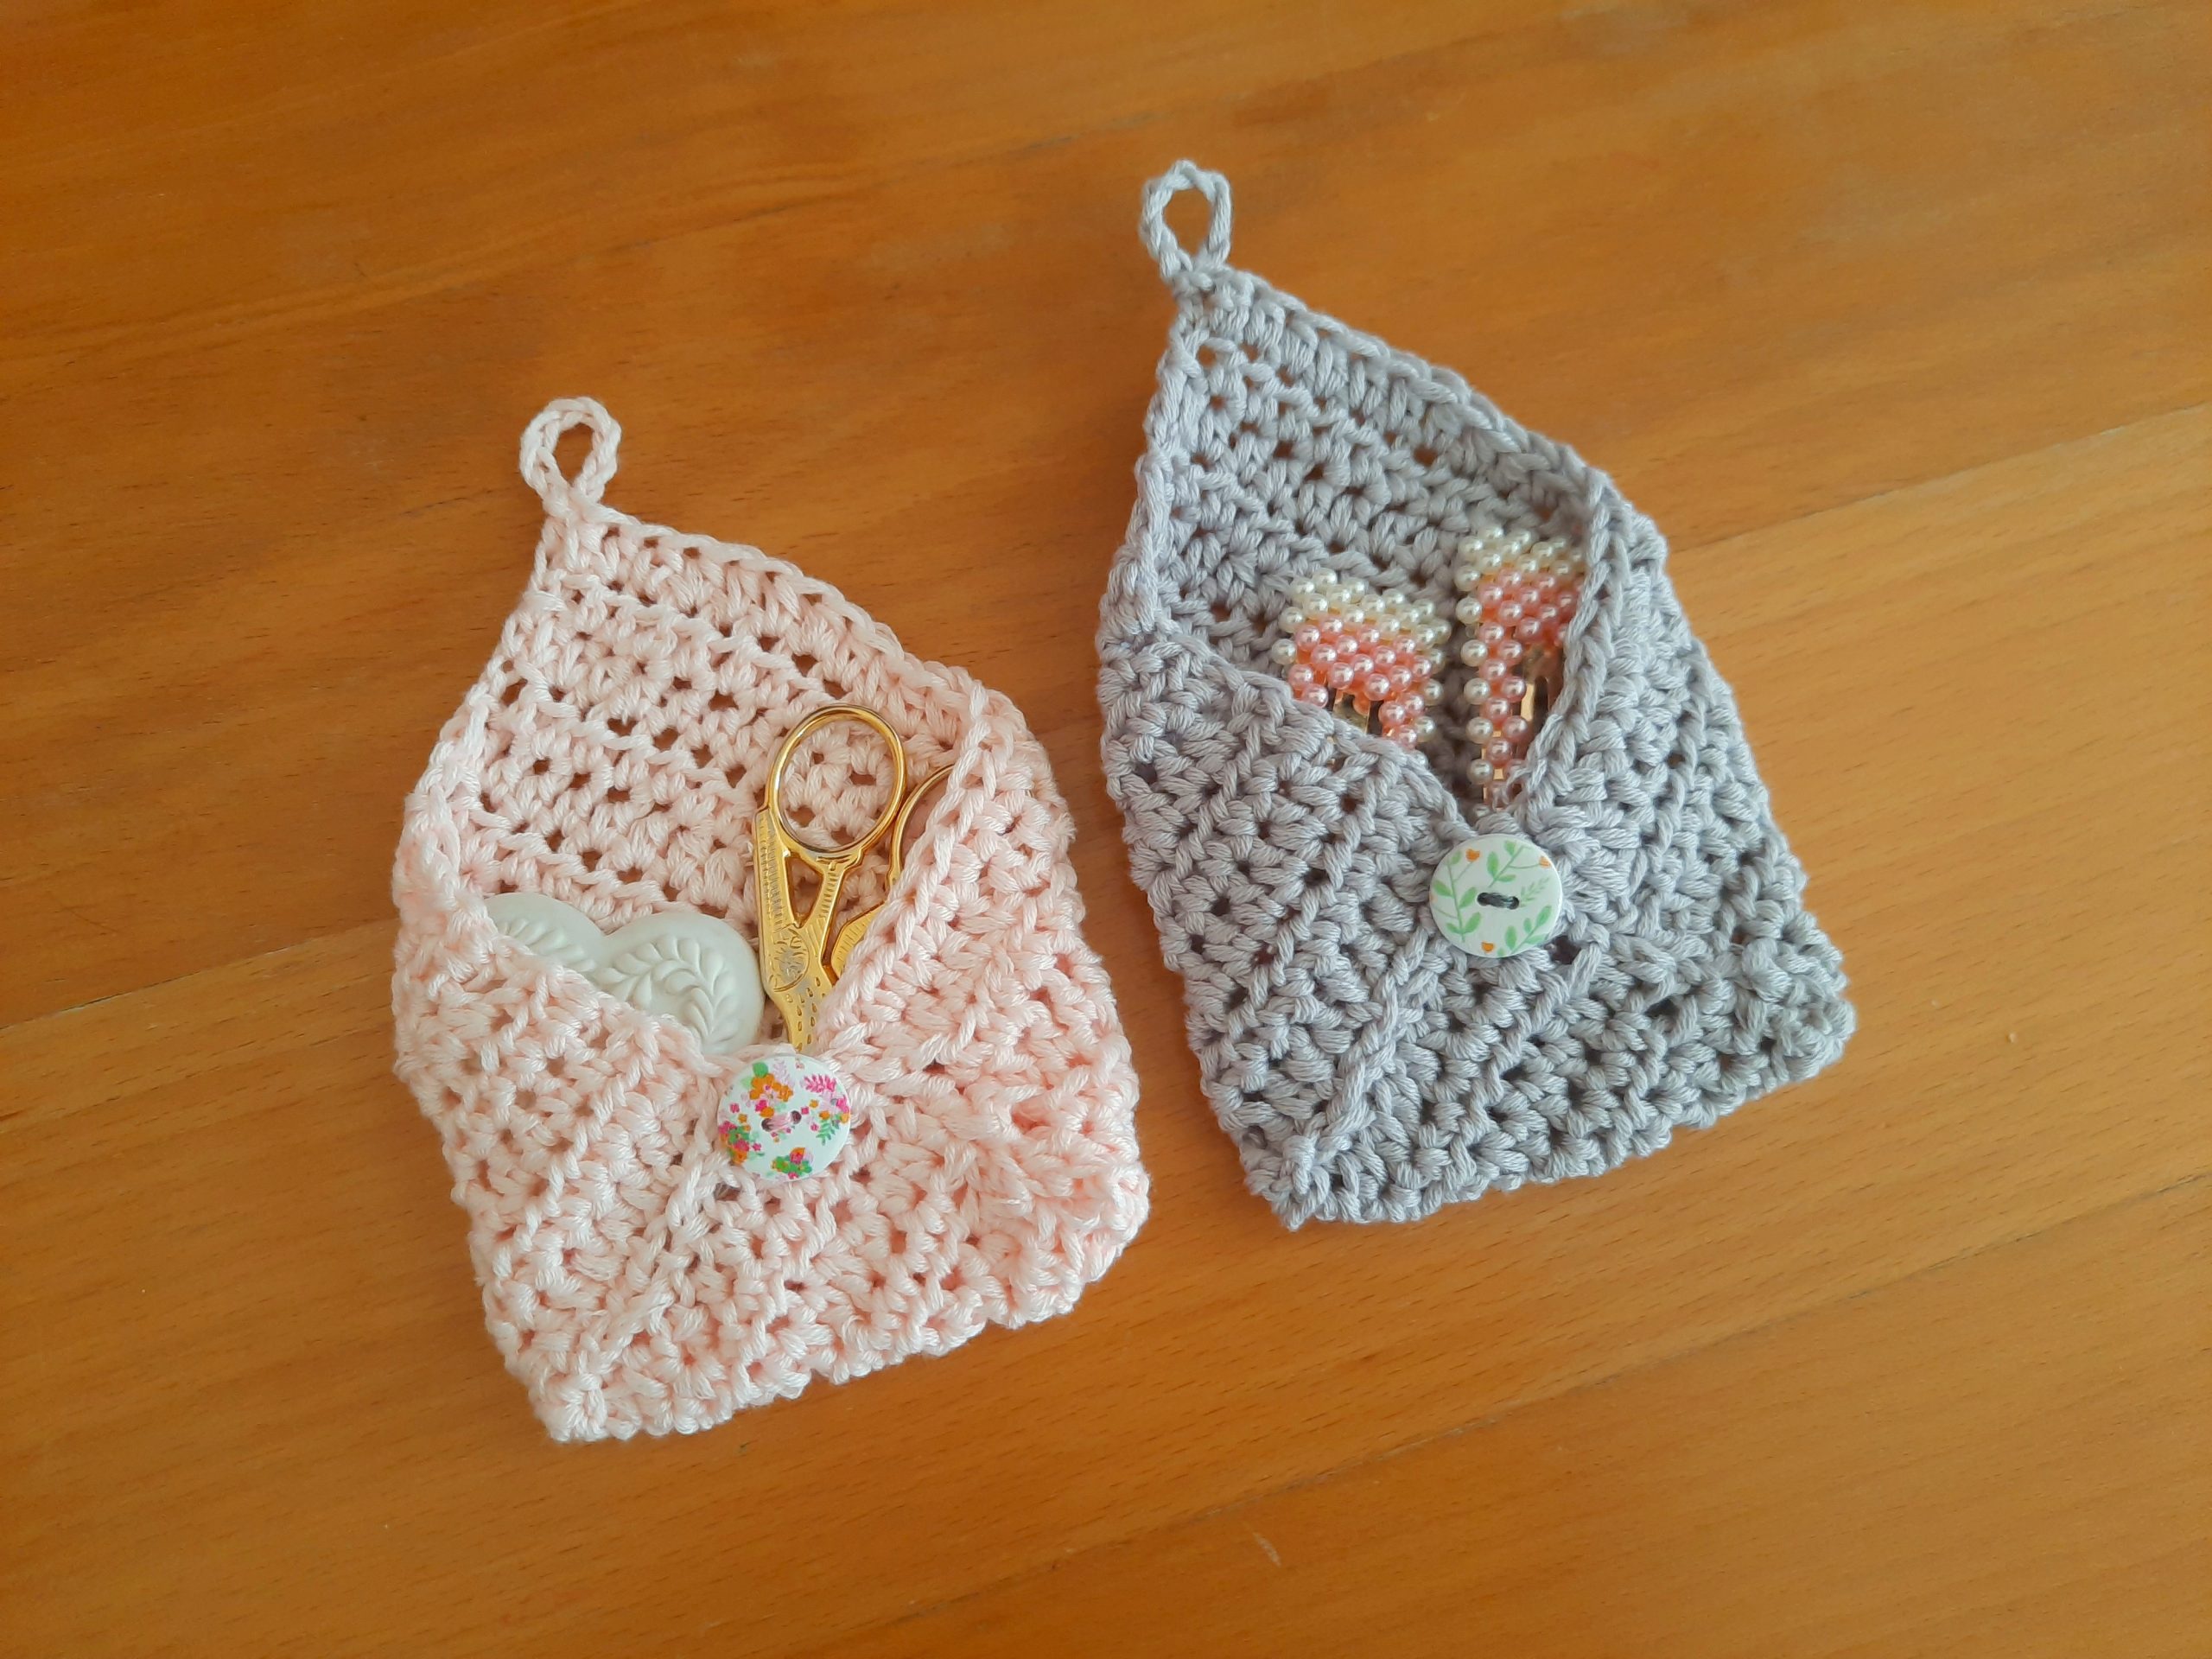 Harlow Market Tote FREE Crochet Pattern — Two of Wands